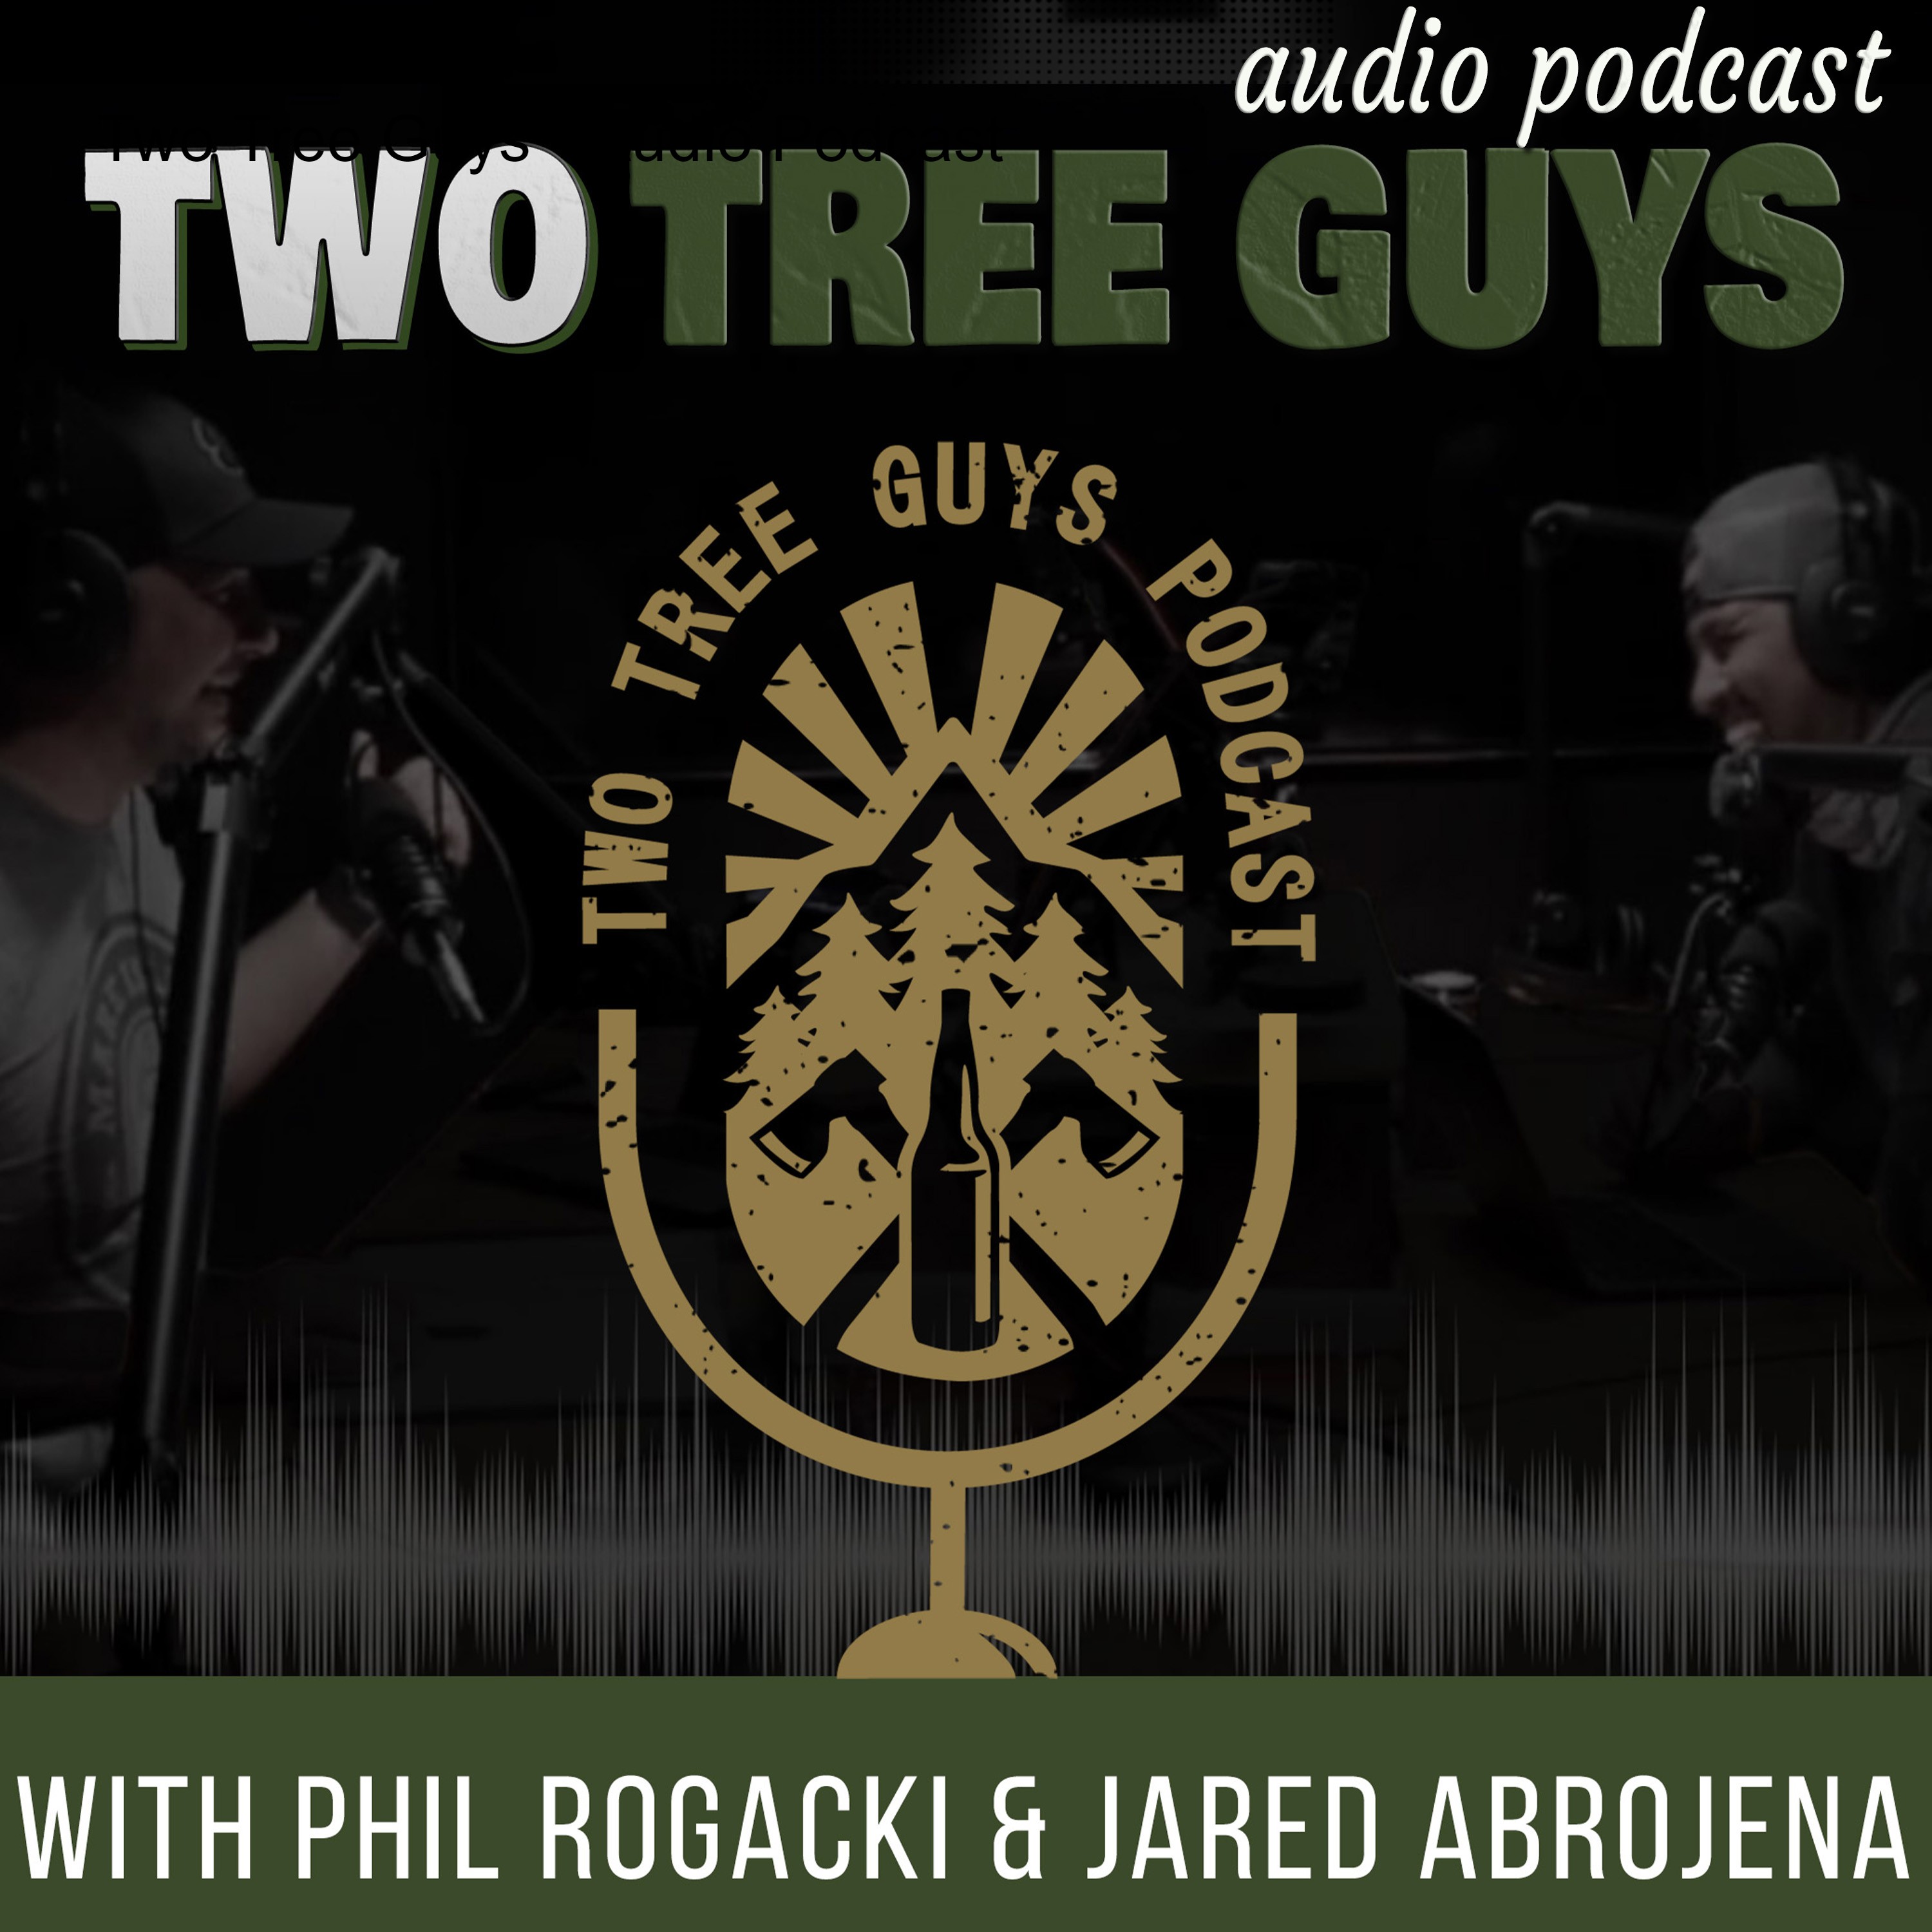 Two Tree Guys - Audio Podcast